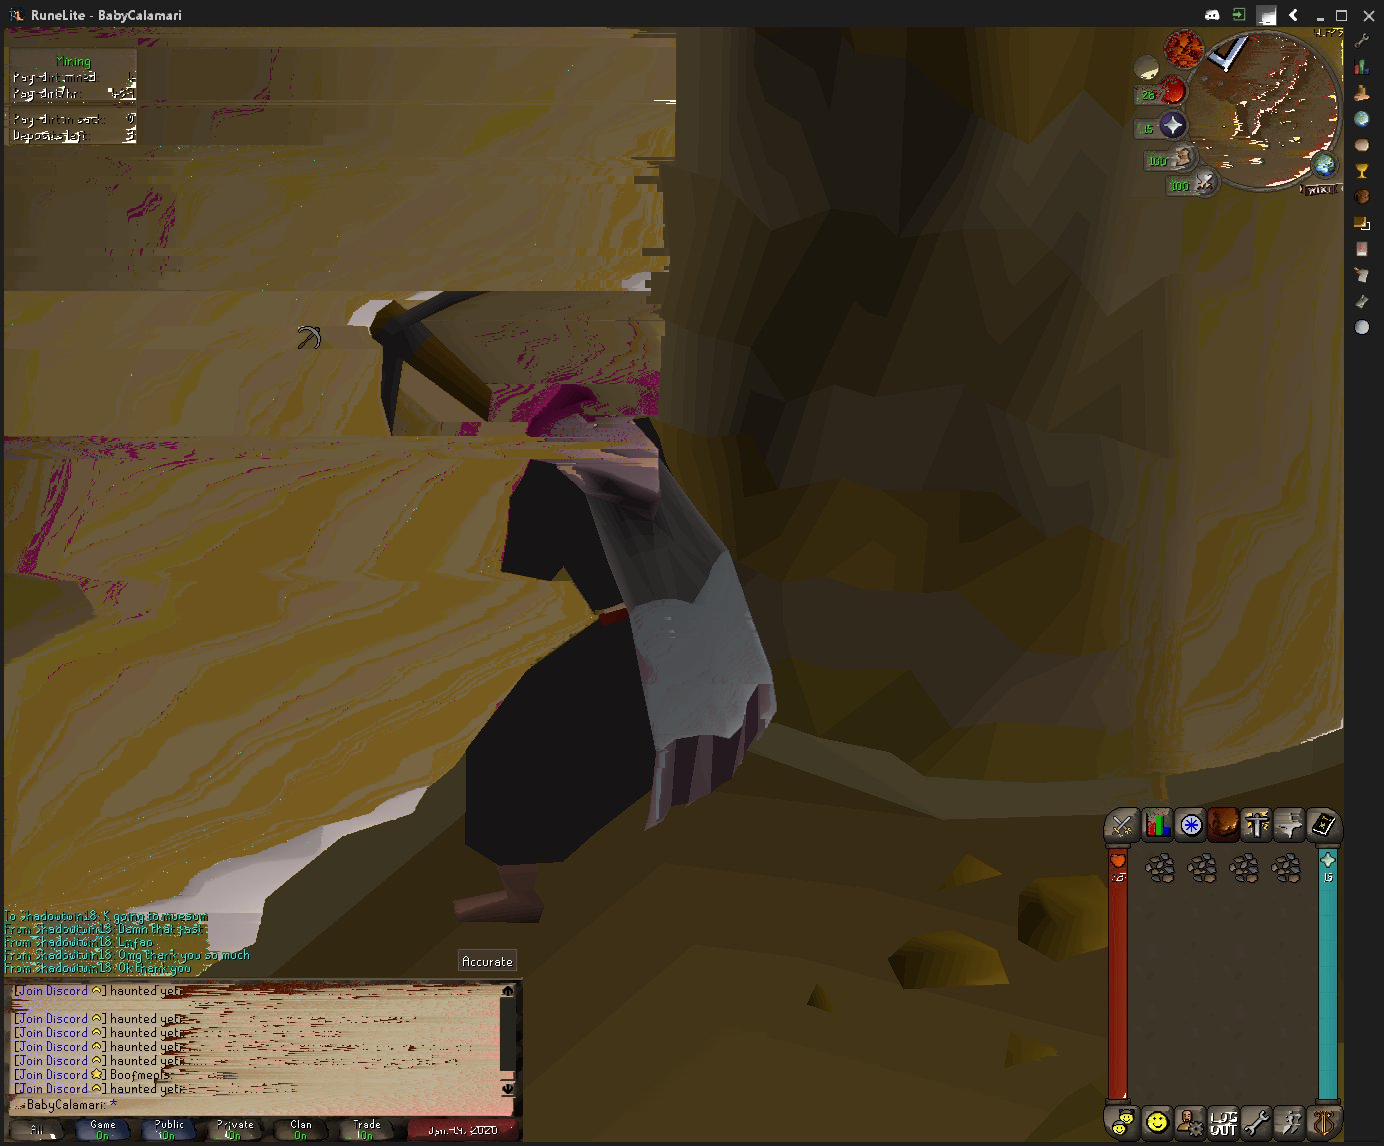 A distorted screenshot of a RuneScape character mining a vein of ore.